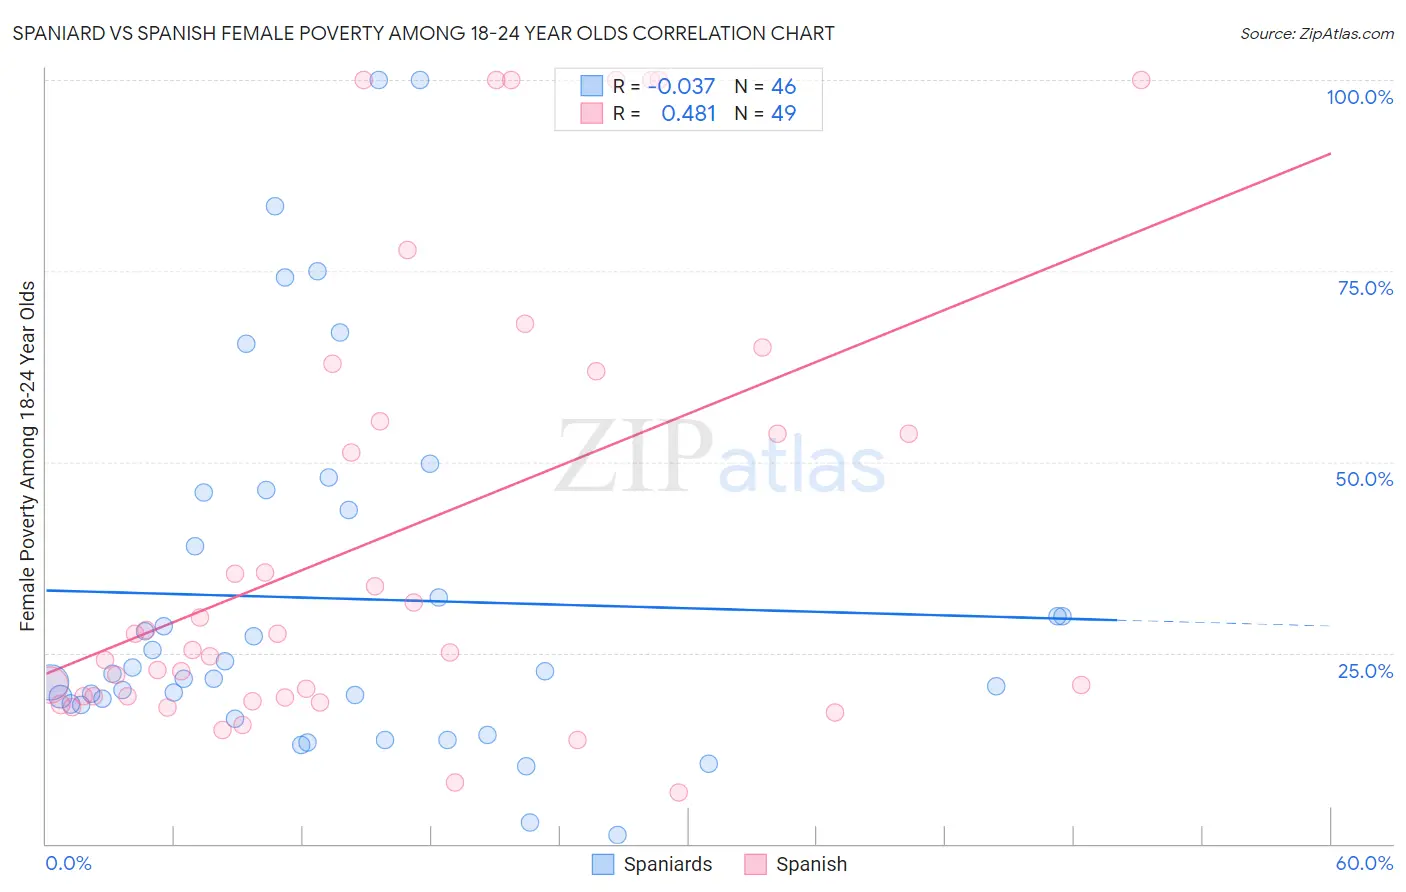 Spaniard vs Spanish Female Poverty Among 18-24 Year Olds